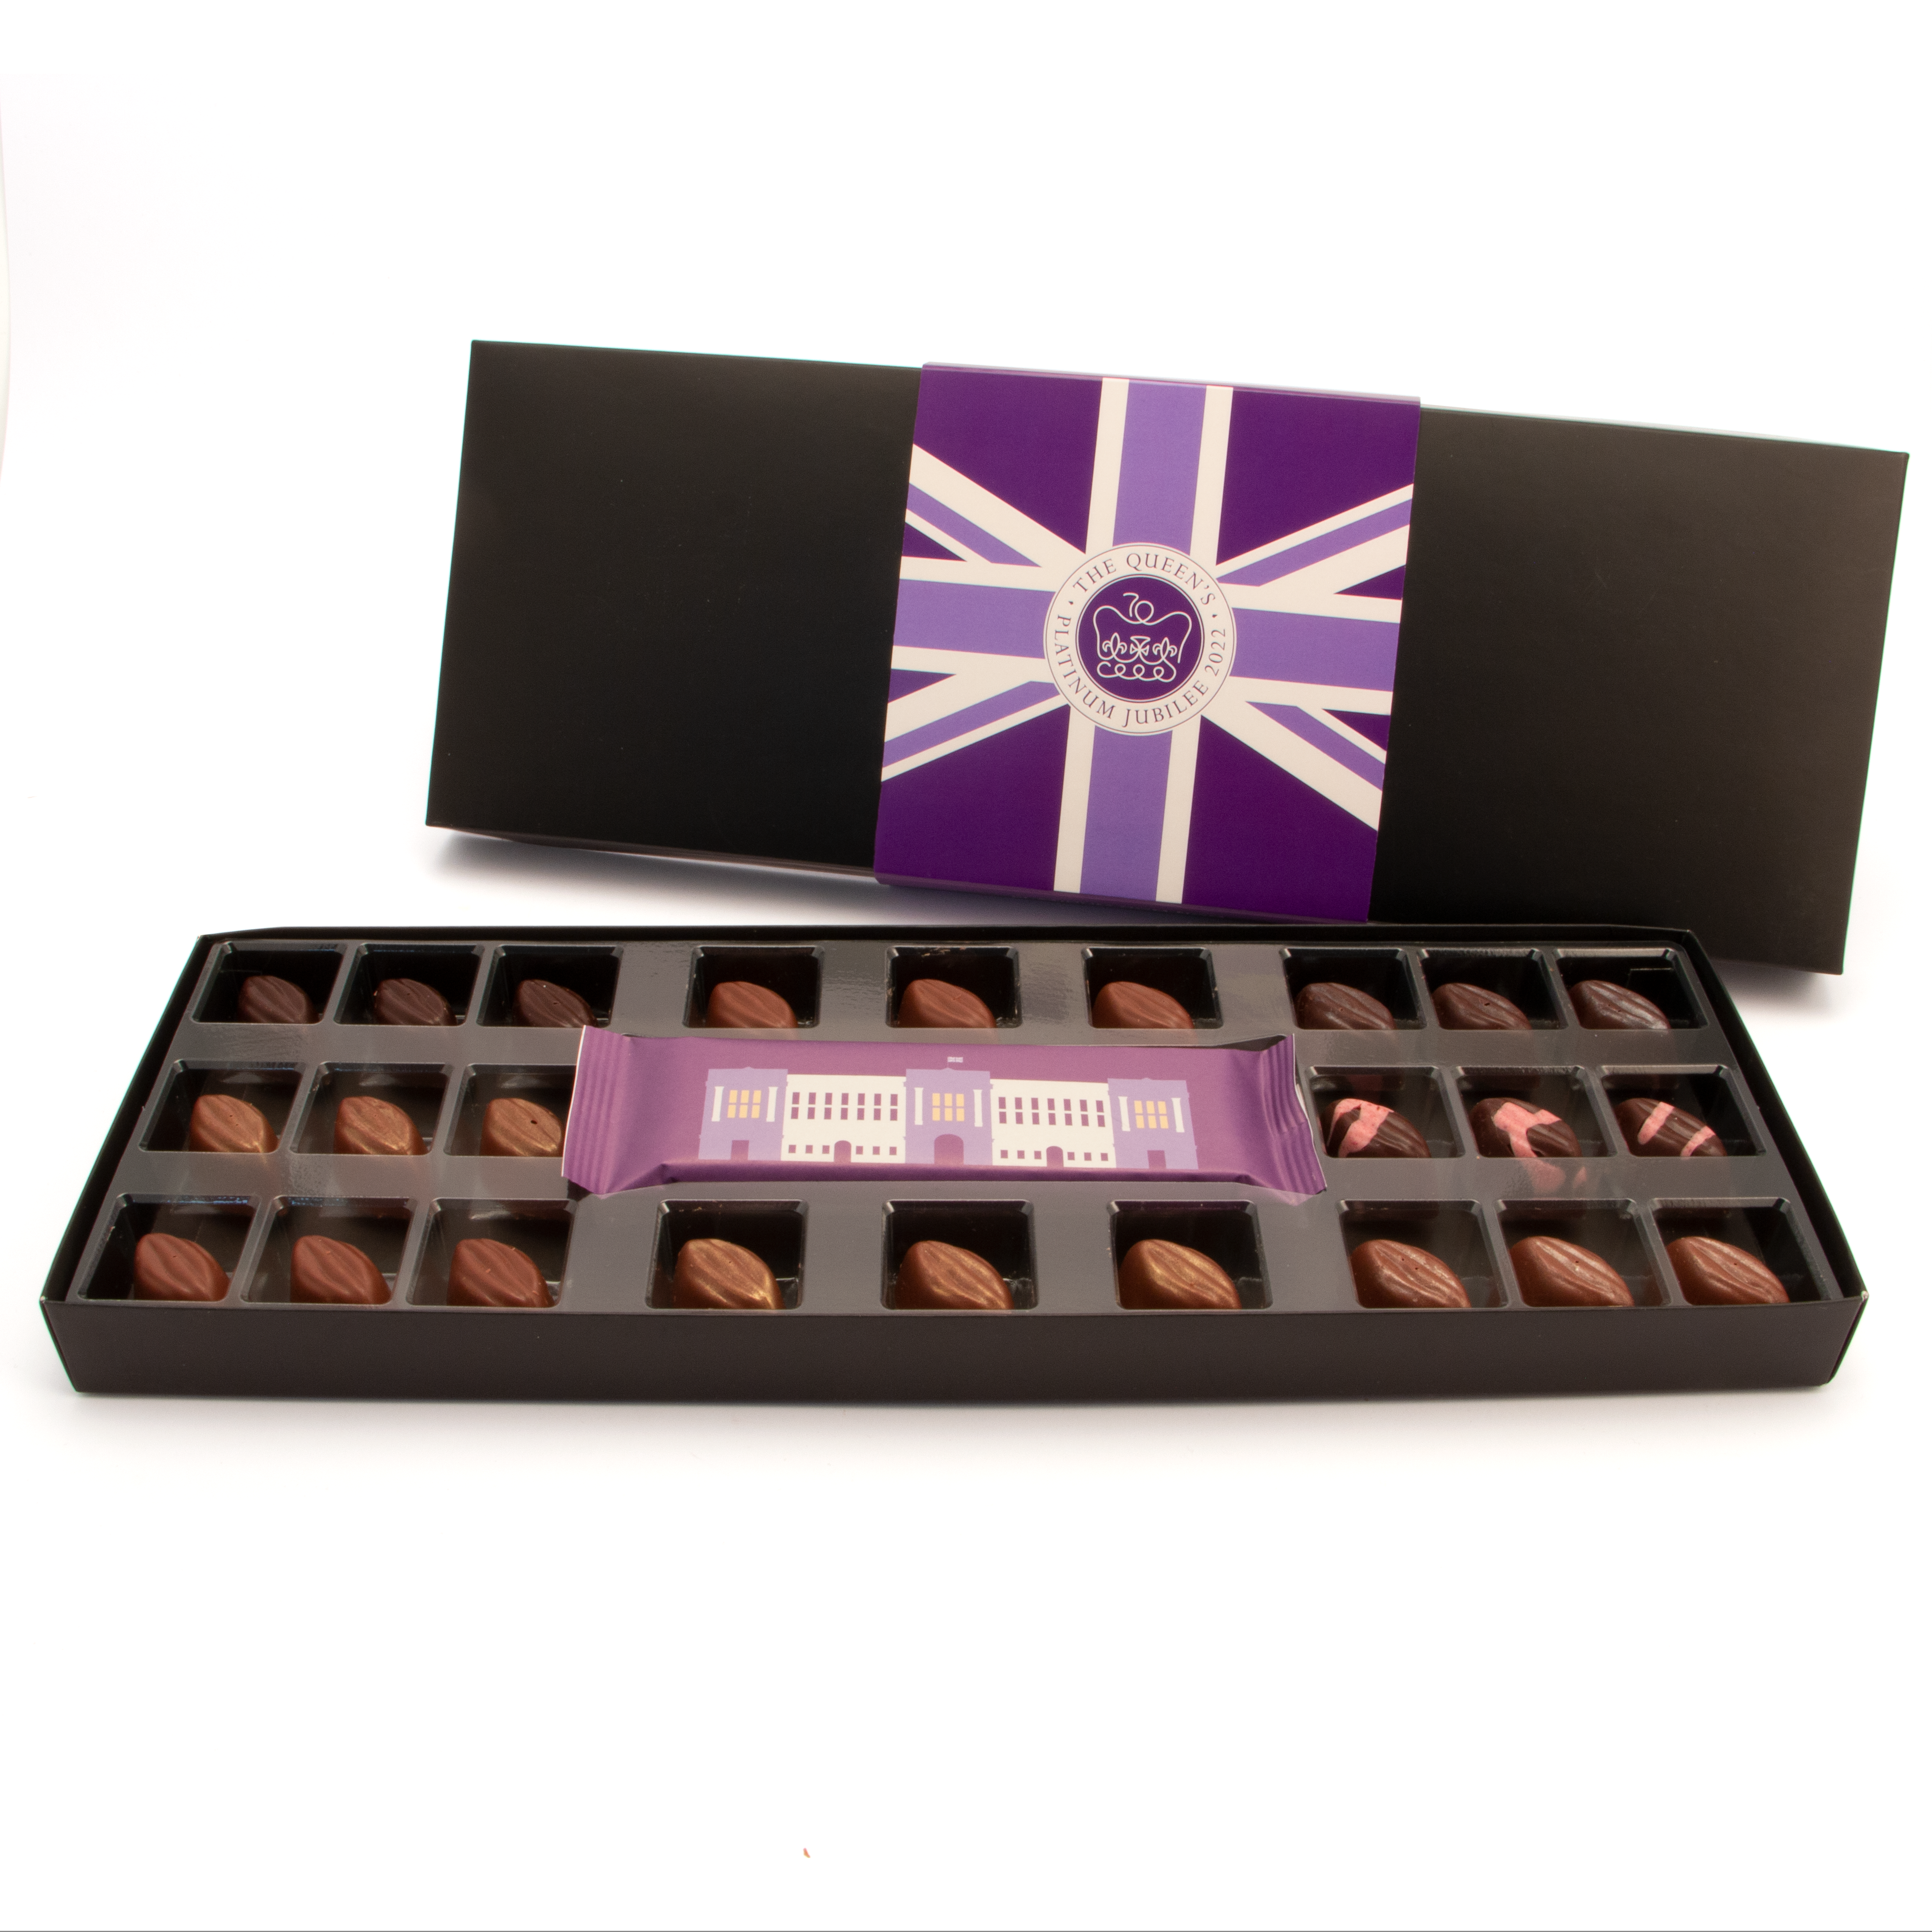 Platinum Jubilee – Chocolate Selection Box - Chocolate Truffles